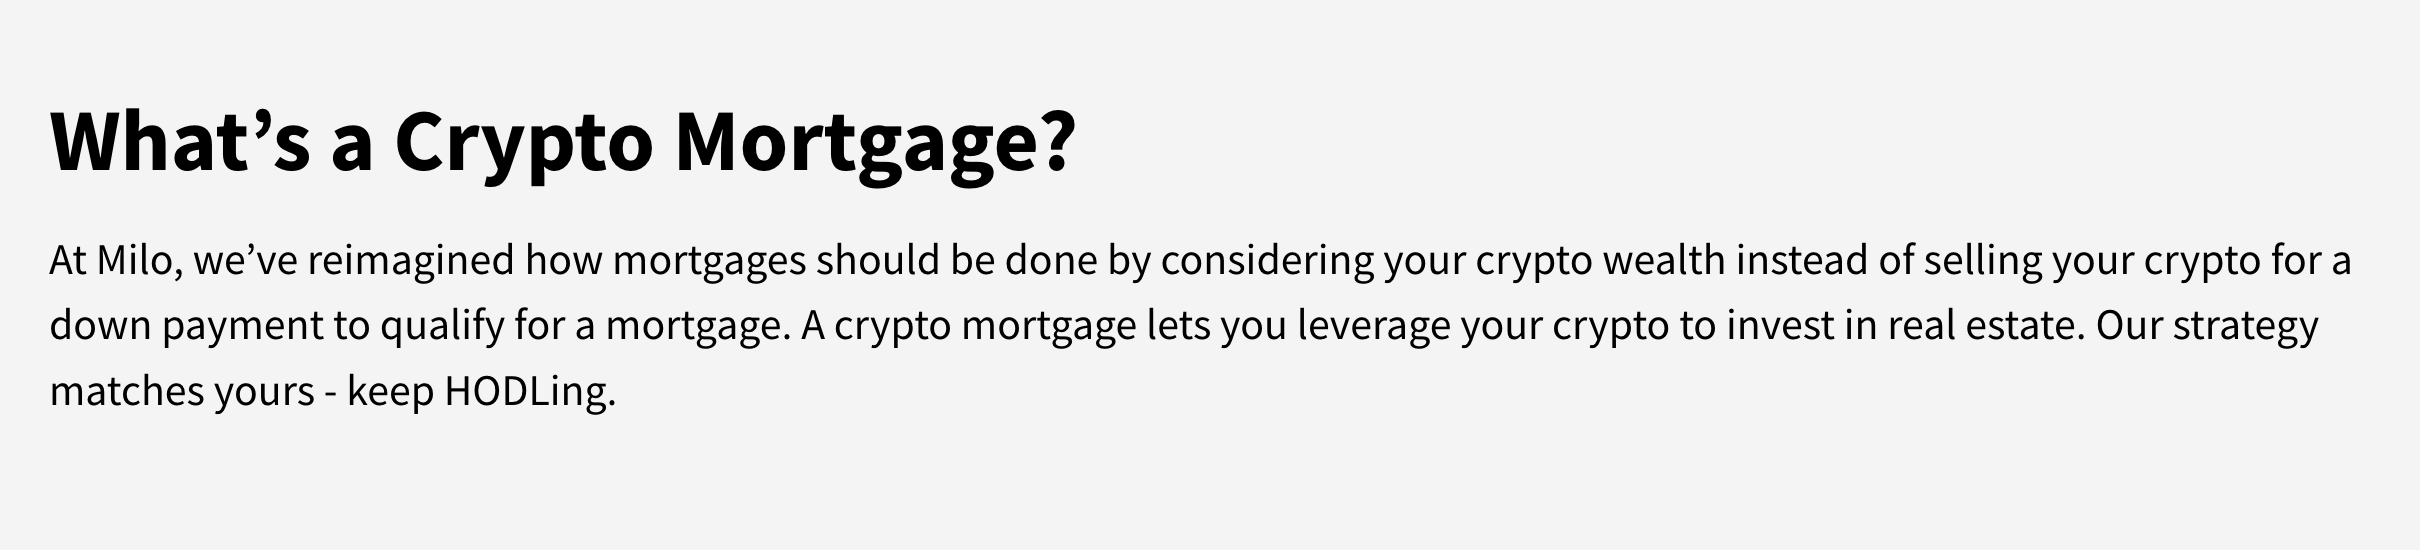 milo crypto mortgage